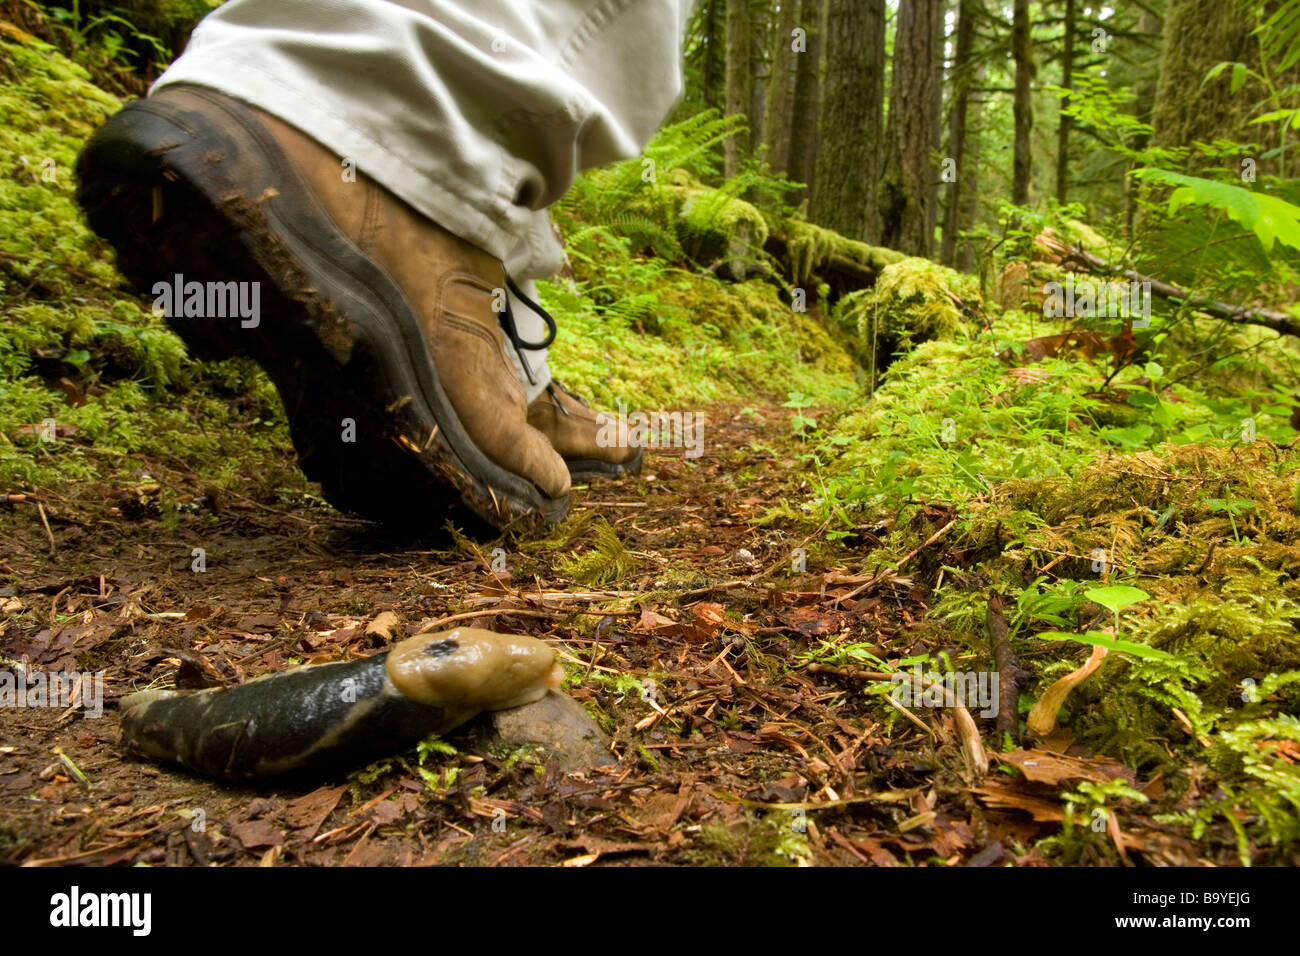 Tread Lightly - Rockport State Park, Washington Stock Photo - Alamy